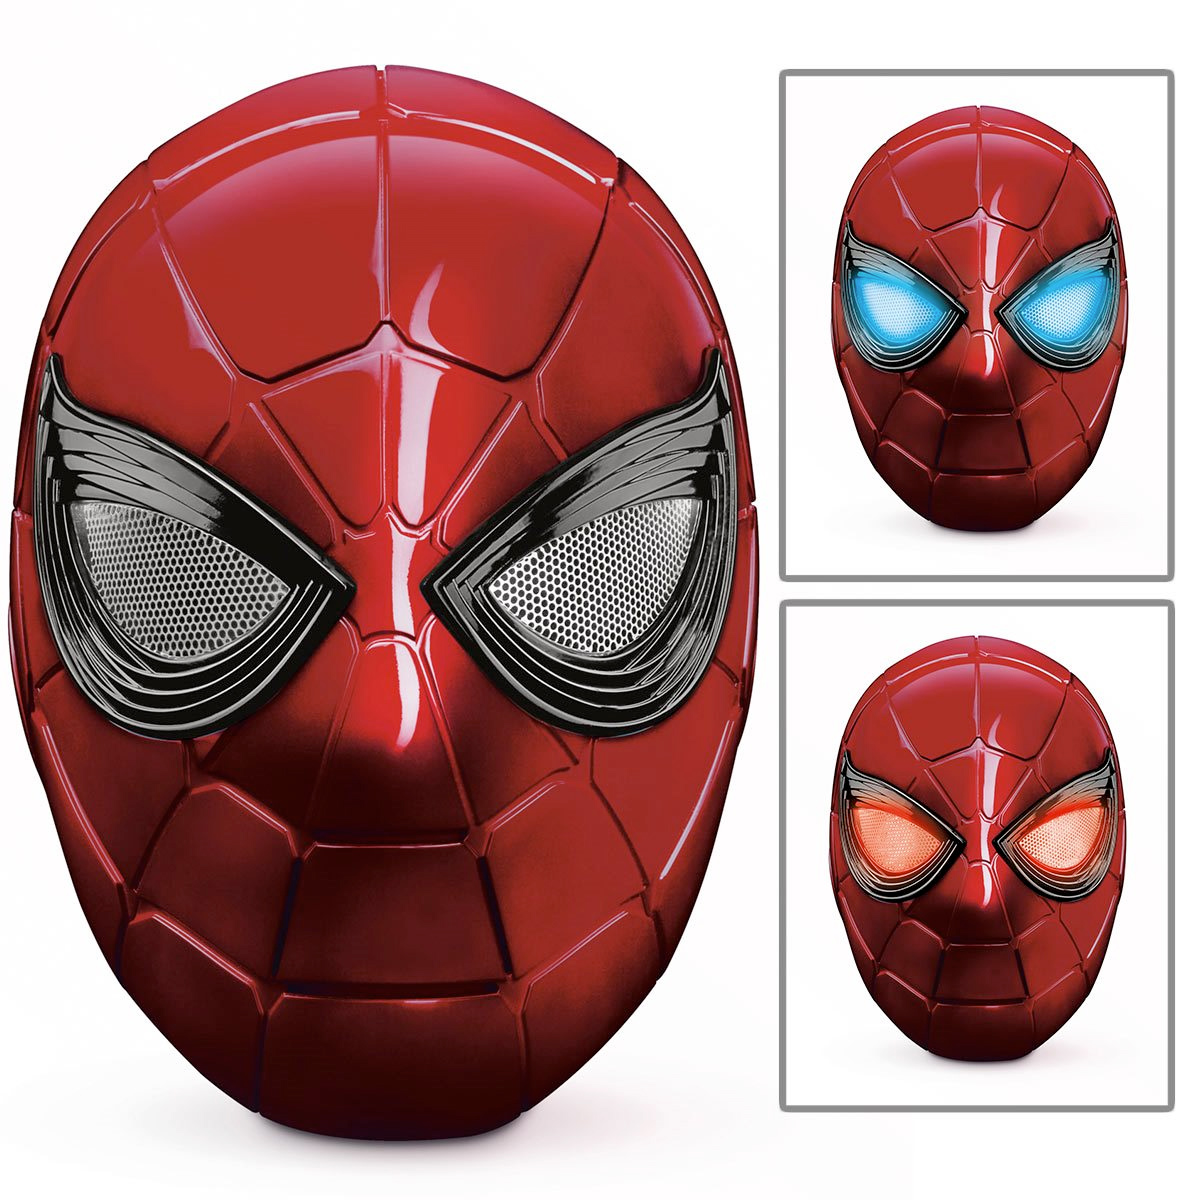 Capacete Marvel Legends Series Spider-Man Iron Spider Electronic Helmet